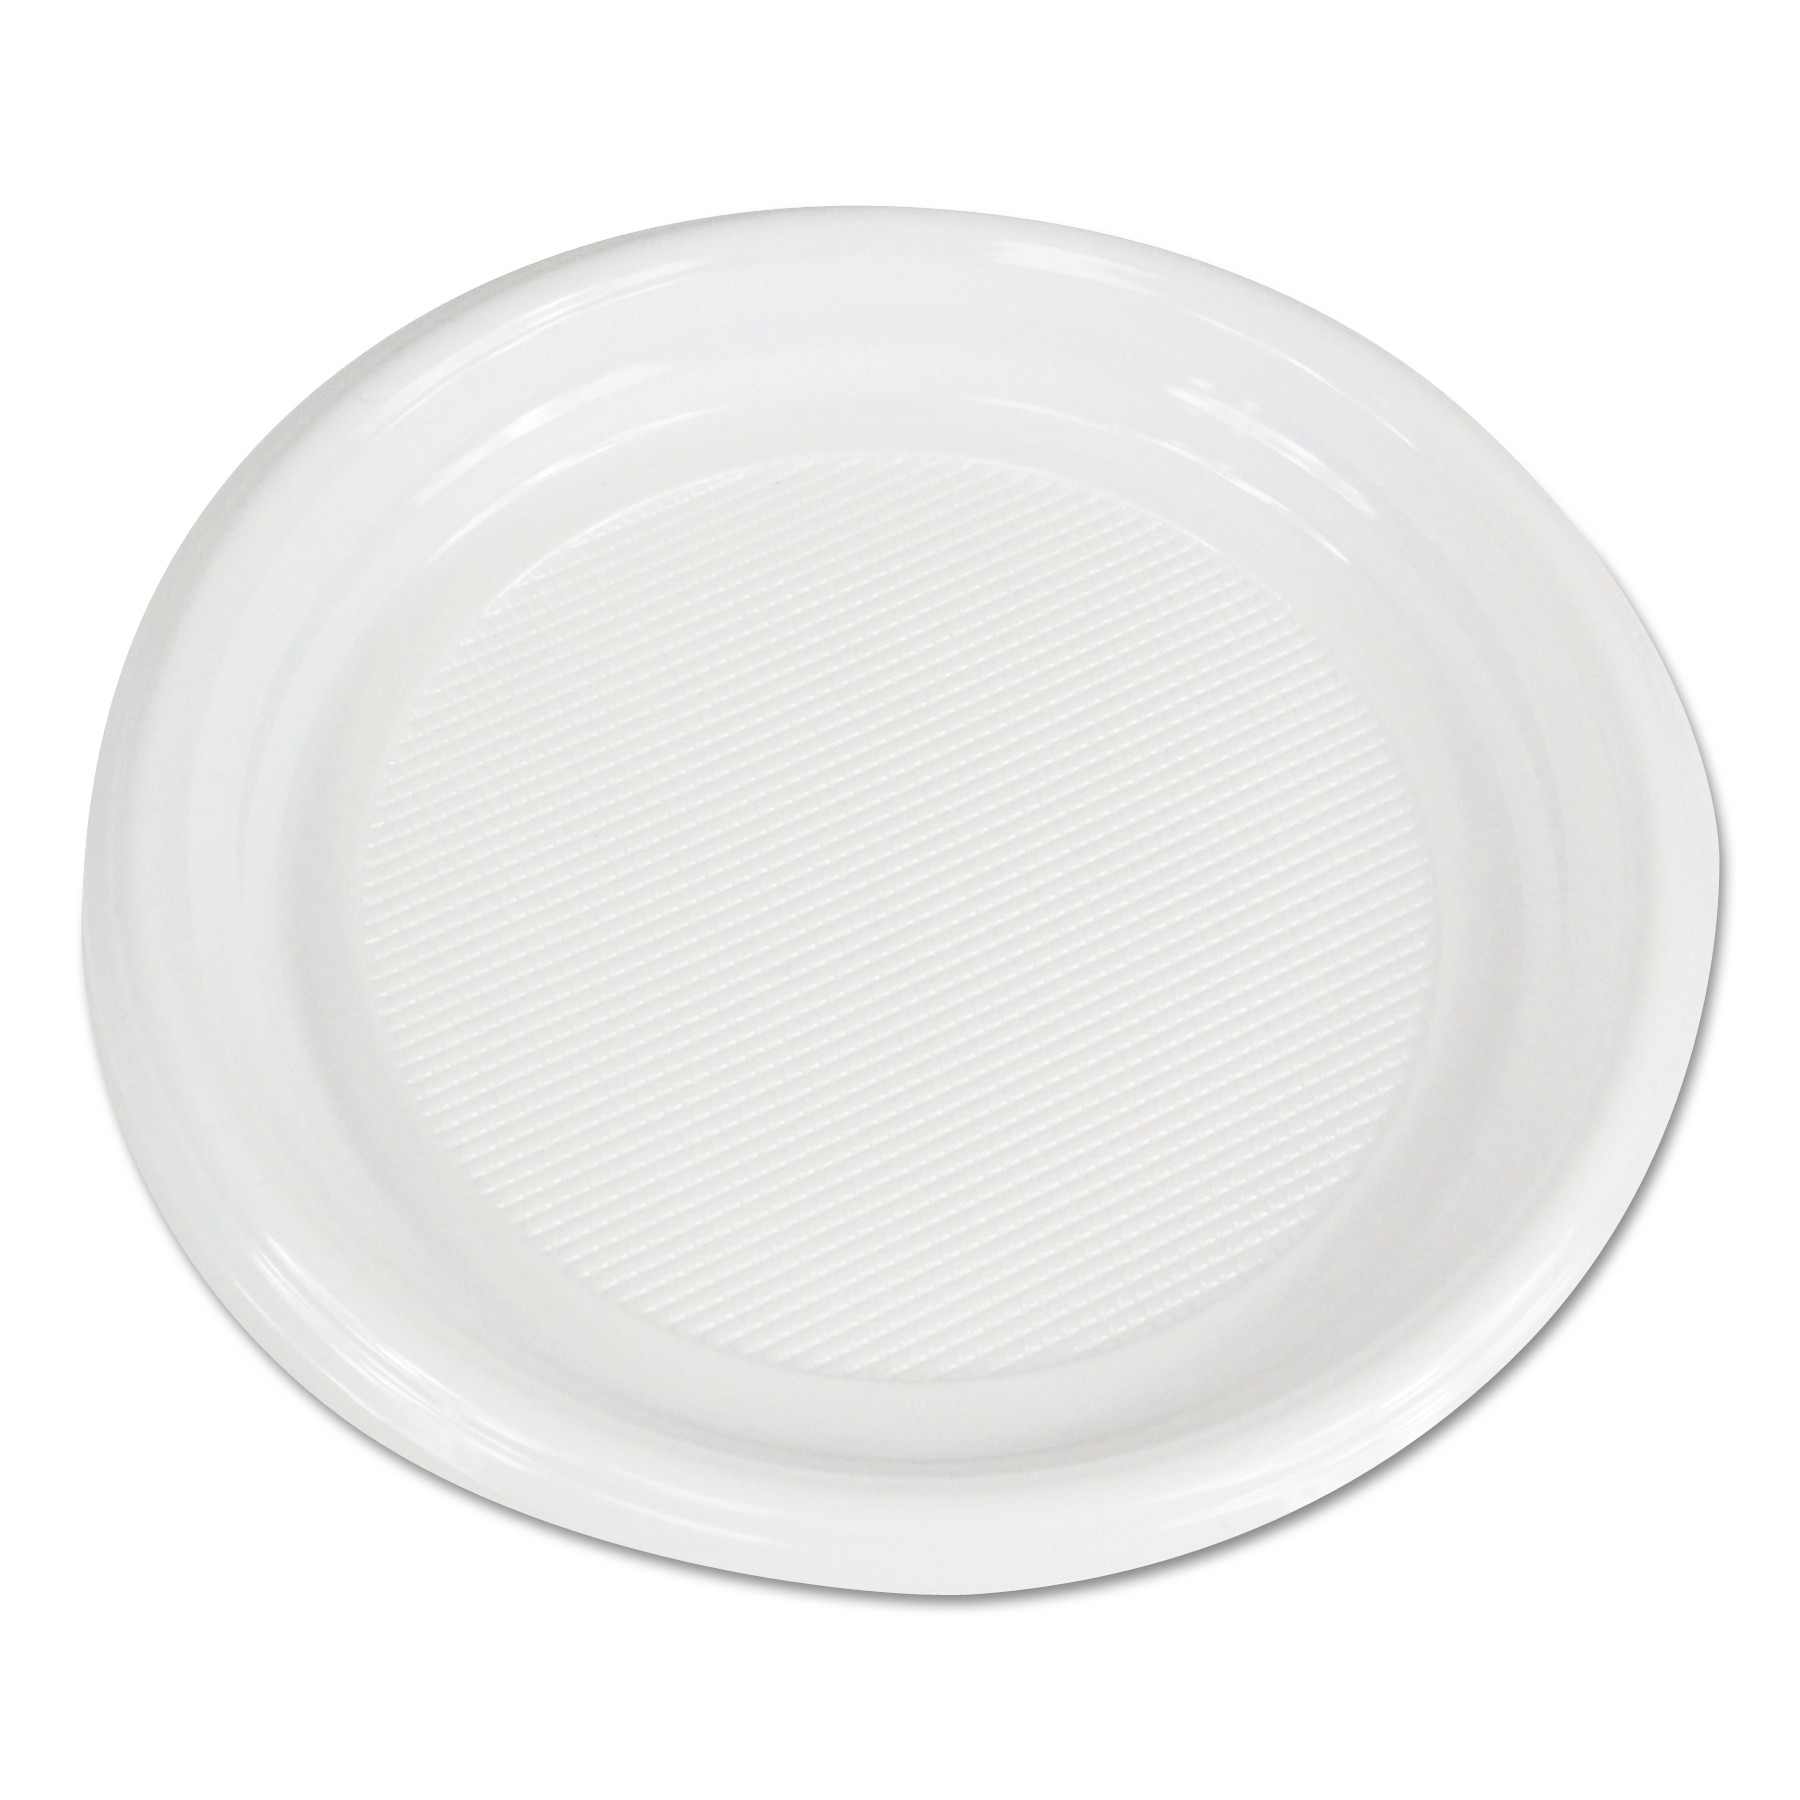 Hi-Impact Plastic Dinnerware, Plate, 9 Diameter, White, 500/Carton